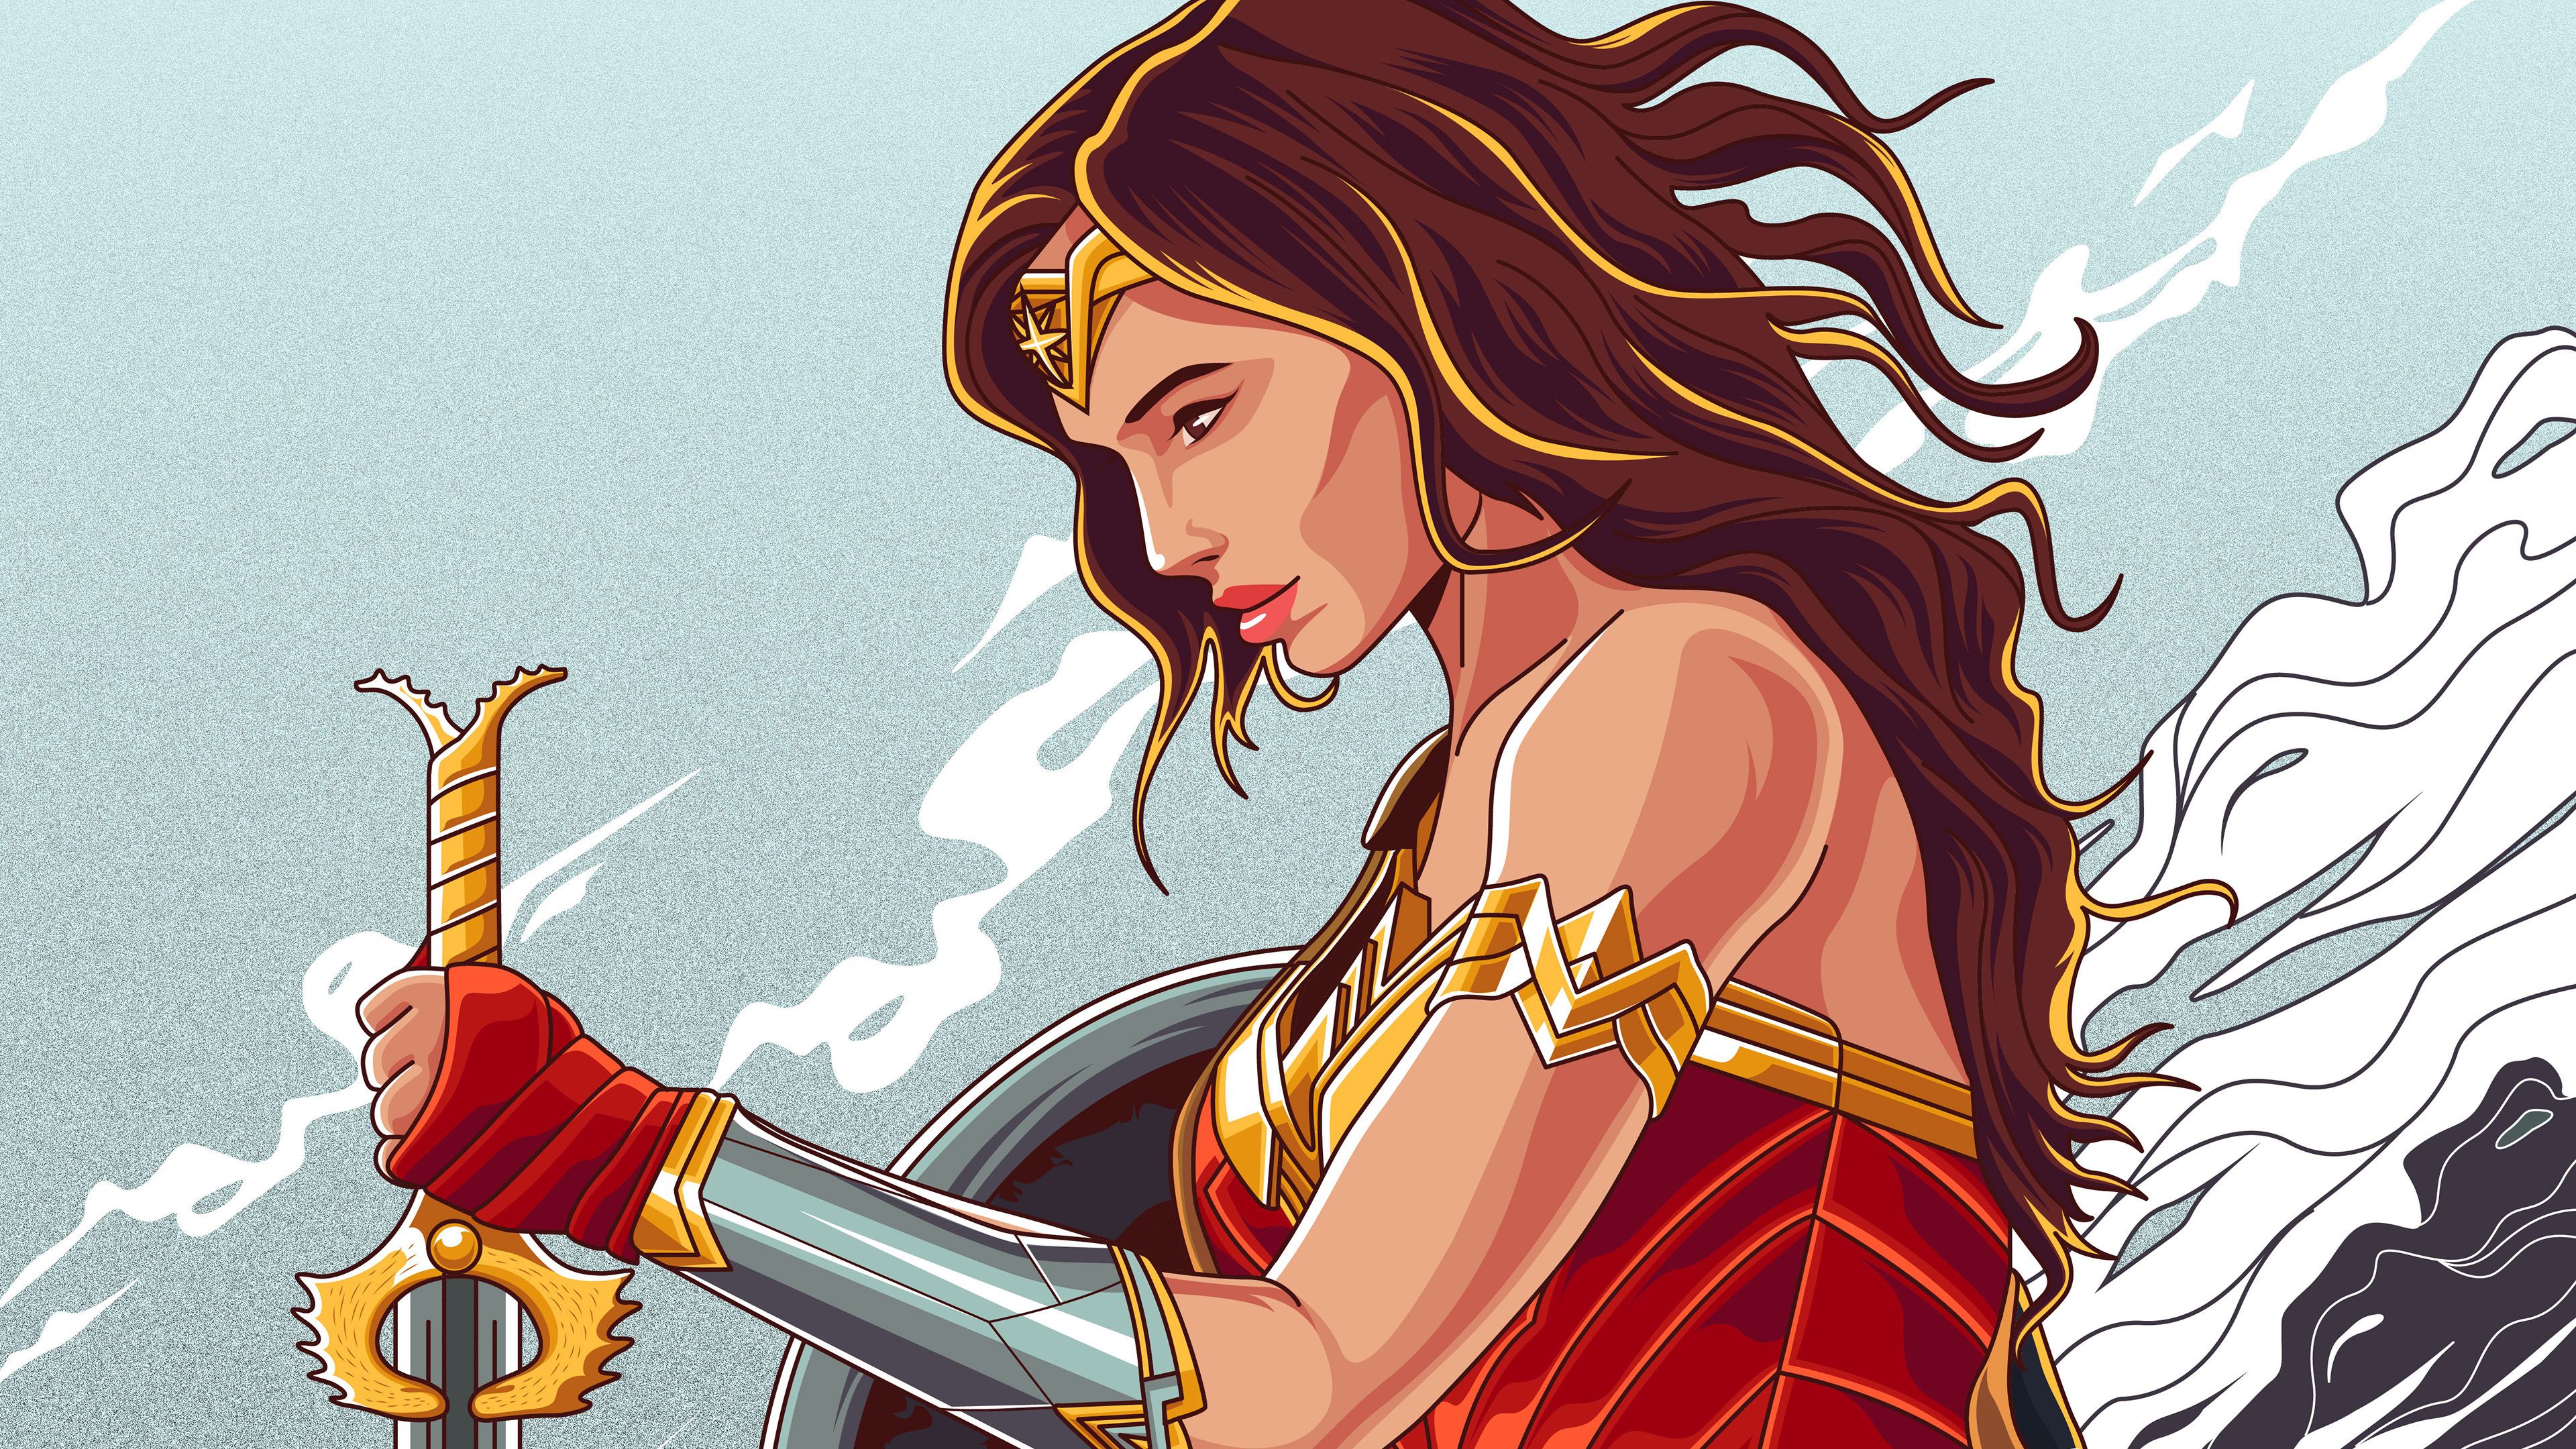 200+] Wonder Woman Wallpapers | Wallpapers.com